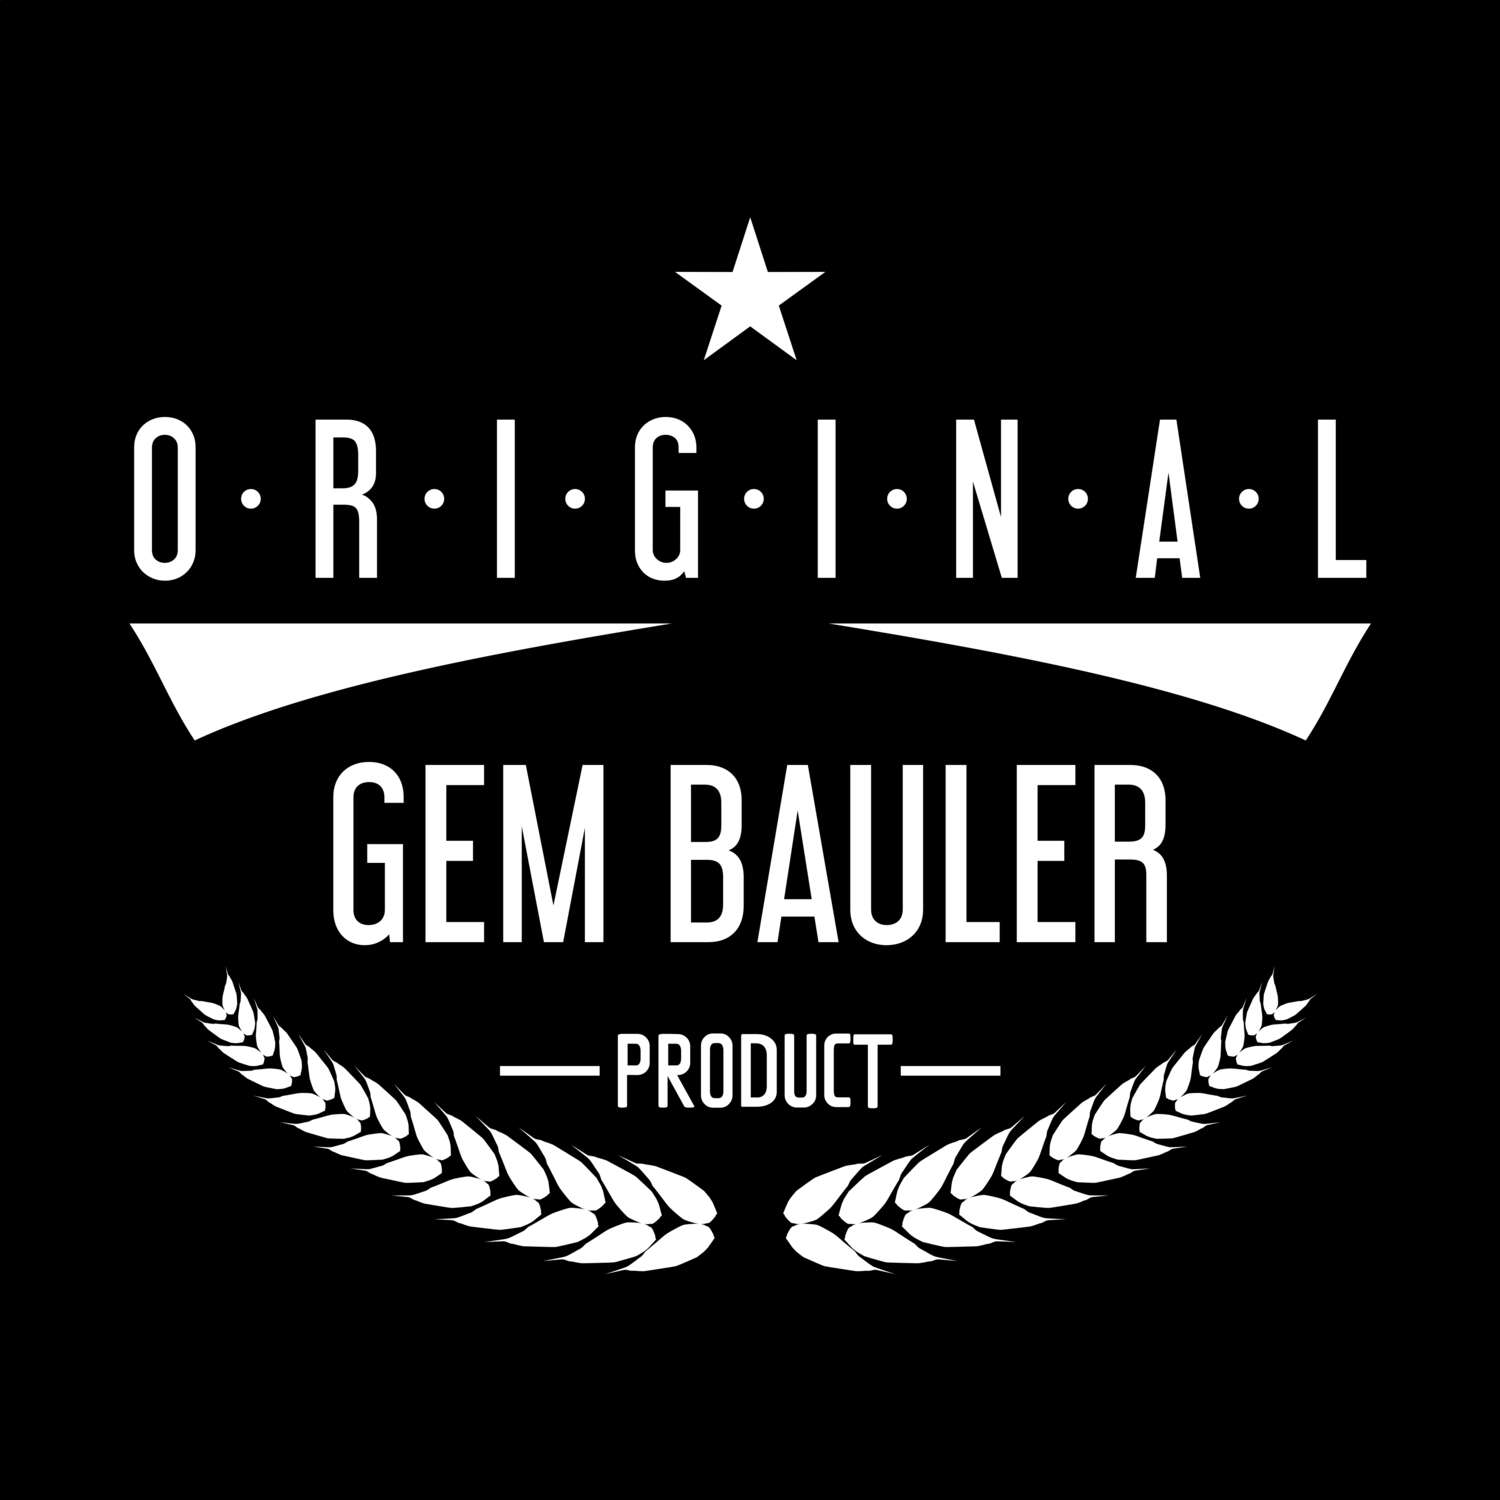 Gem Bauler T-Shirt »Original Product«